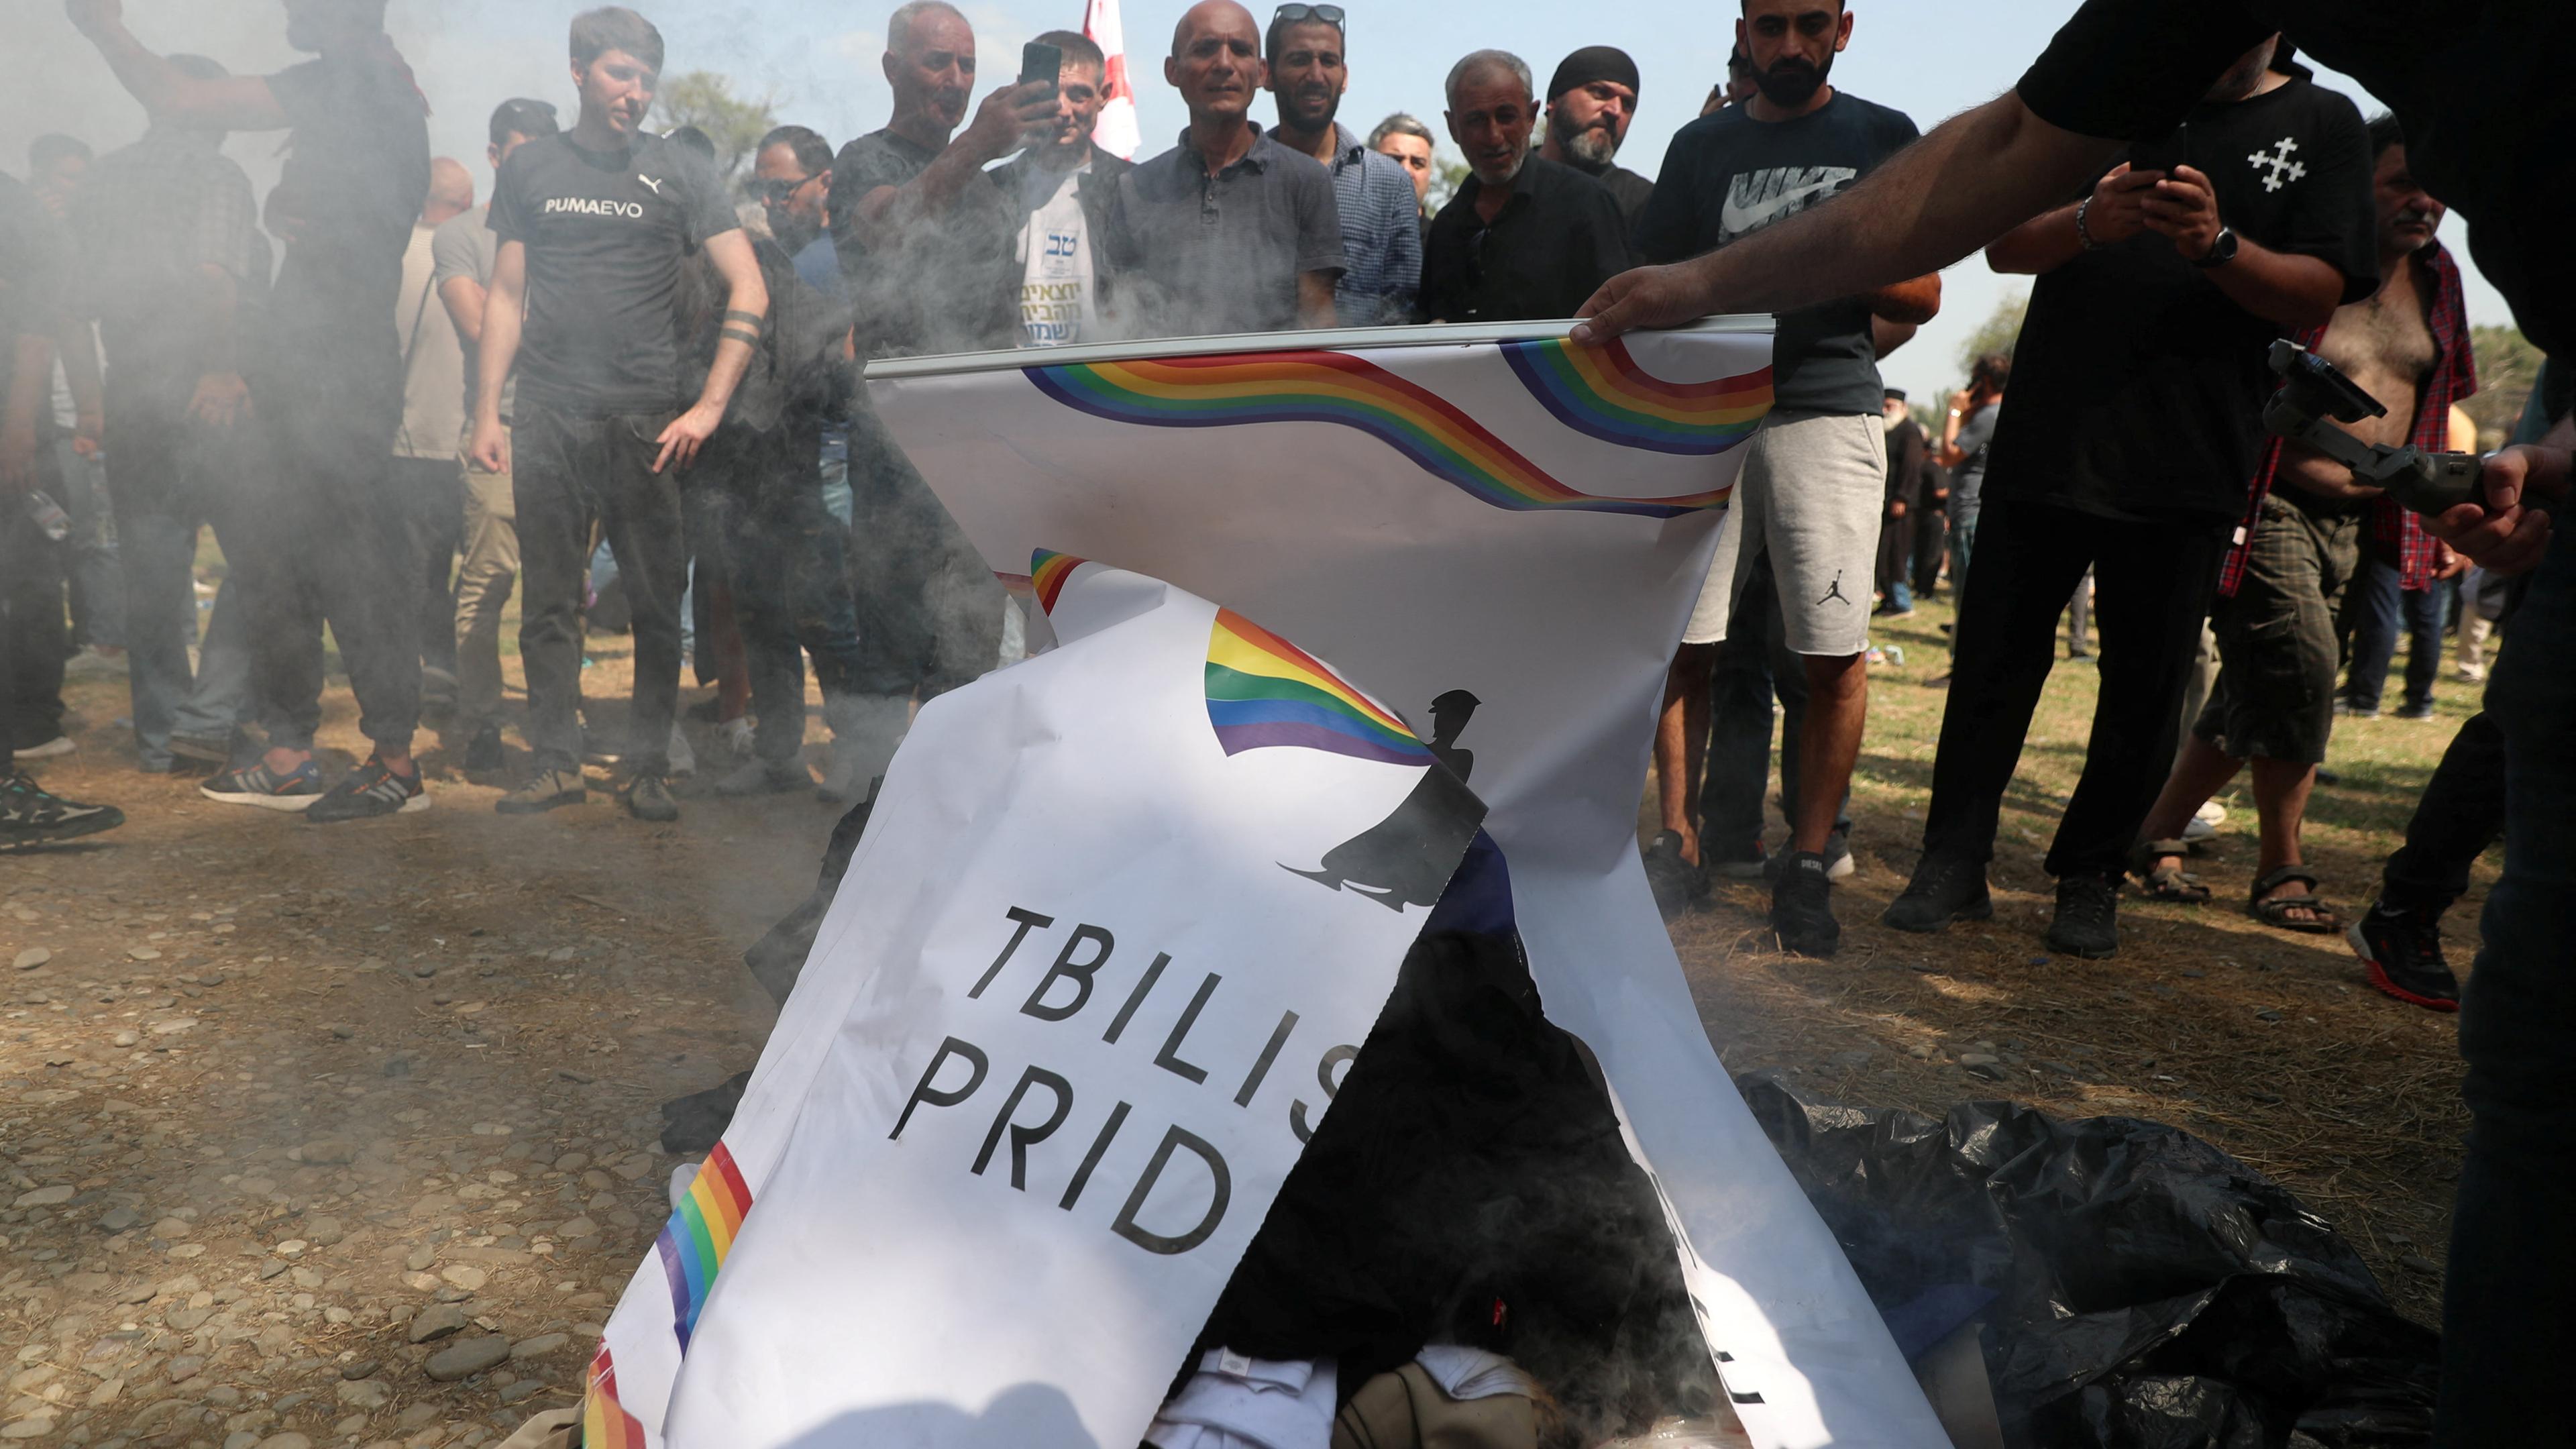 Gegner des Pride Festes verbrennen ein Regenbogen-Plakat. 